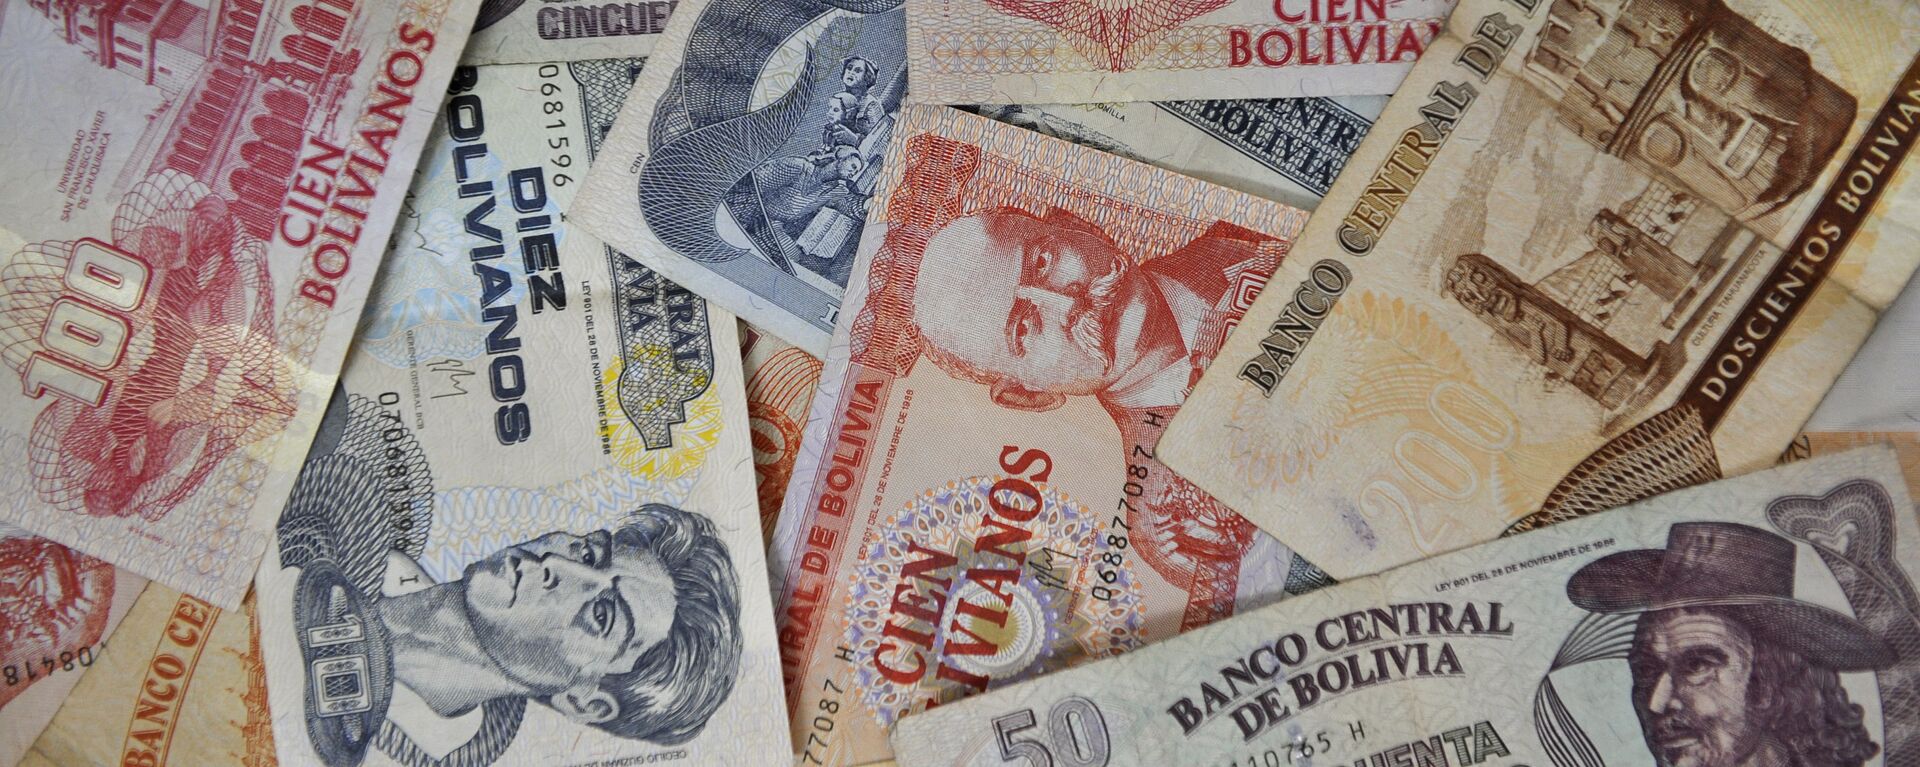 Bolivianos (billetes) - Sputnik Mundo, 1920, 26.05.2021